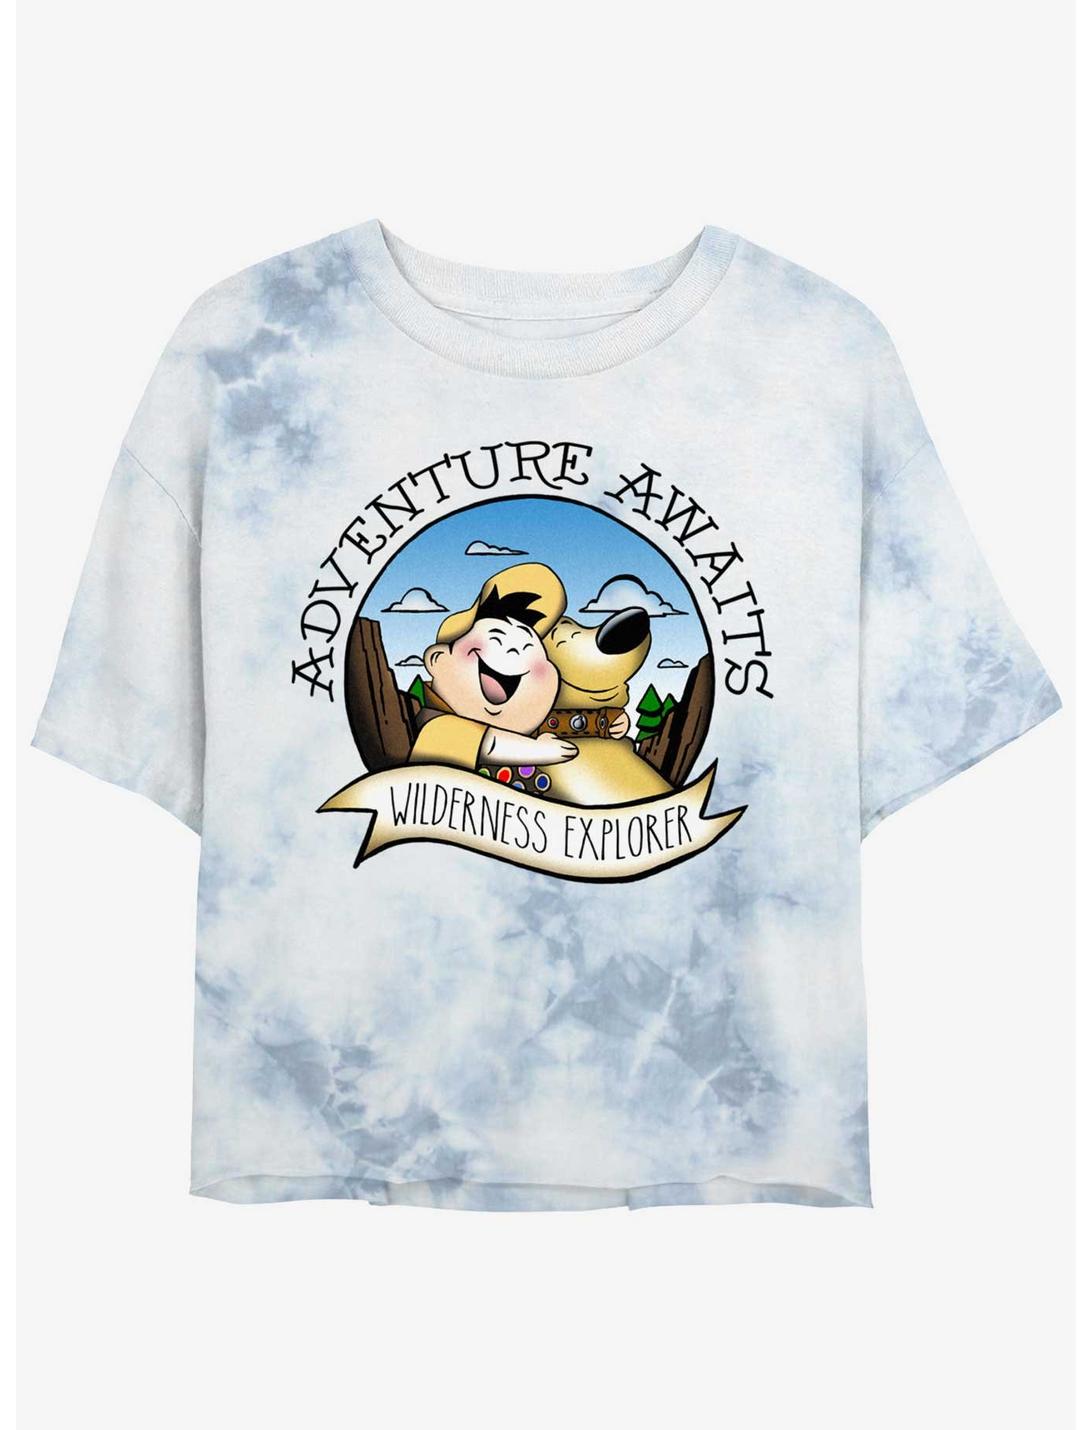 Disney Pixar Up Russell and Dug Wilderness Explorer Womens Tie-Dye Crop T-Shirt, WHITEBLUE, hi-res